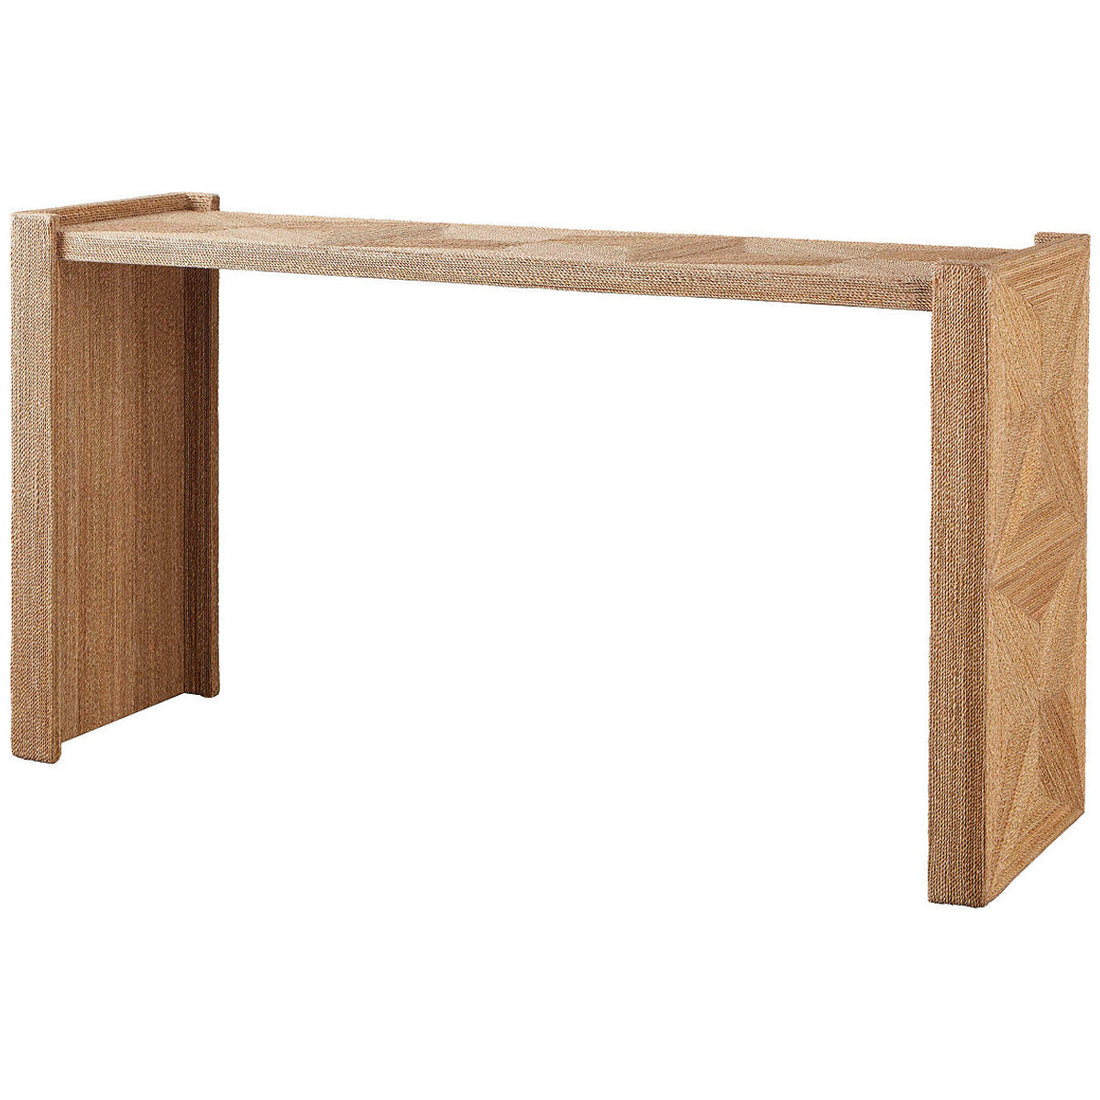 Baker Furniture Lorentz Entry Console Table MC151